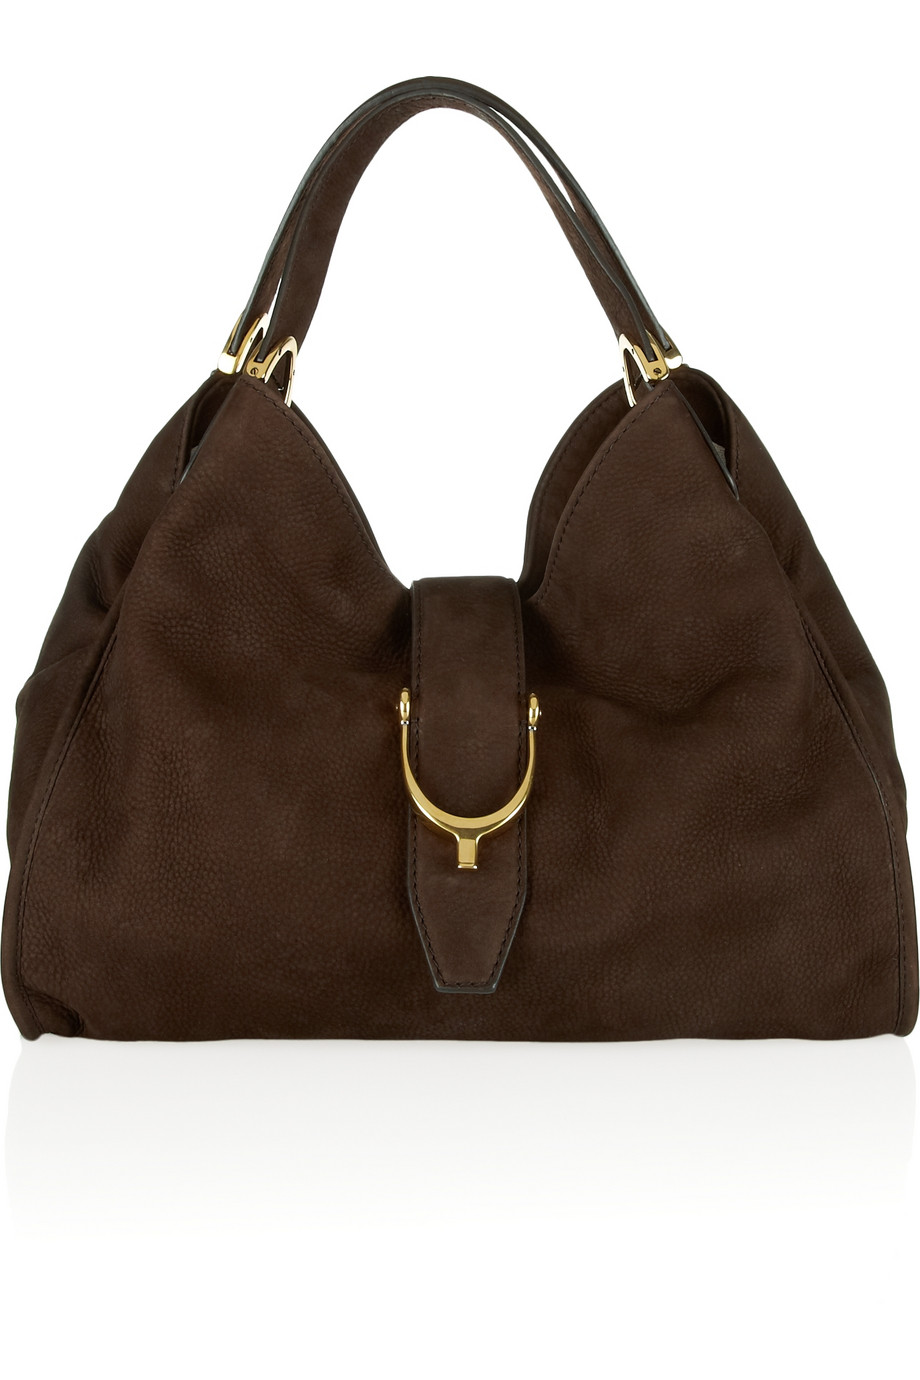 Gucci Soft Stirrup Nubuck Suede Shoulder Bag in Brown (cocoa) | Lyst